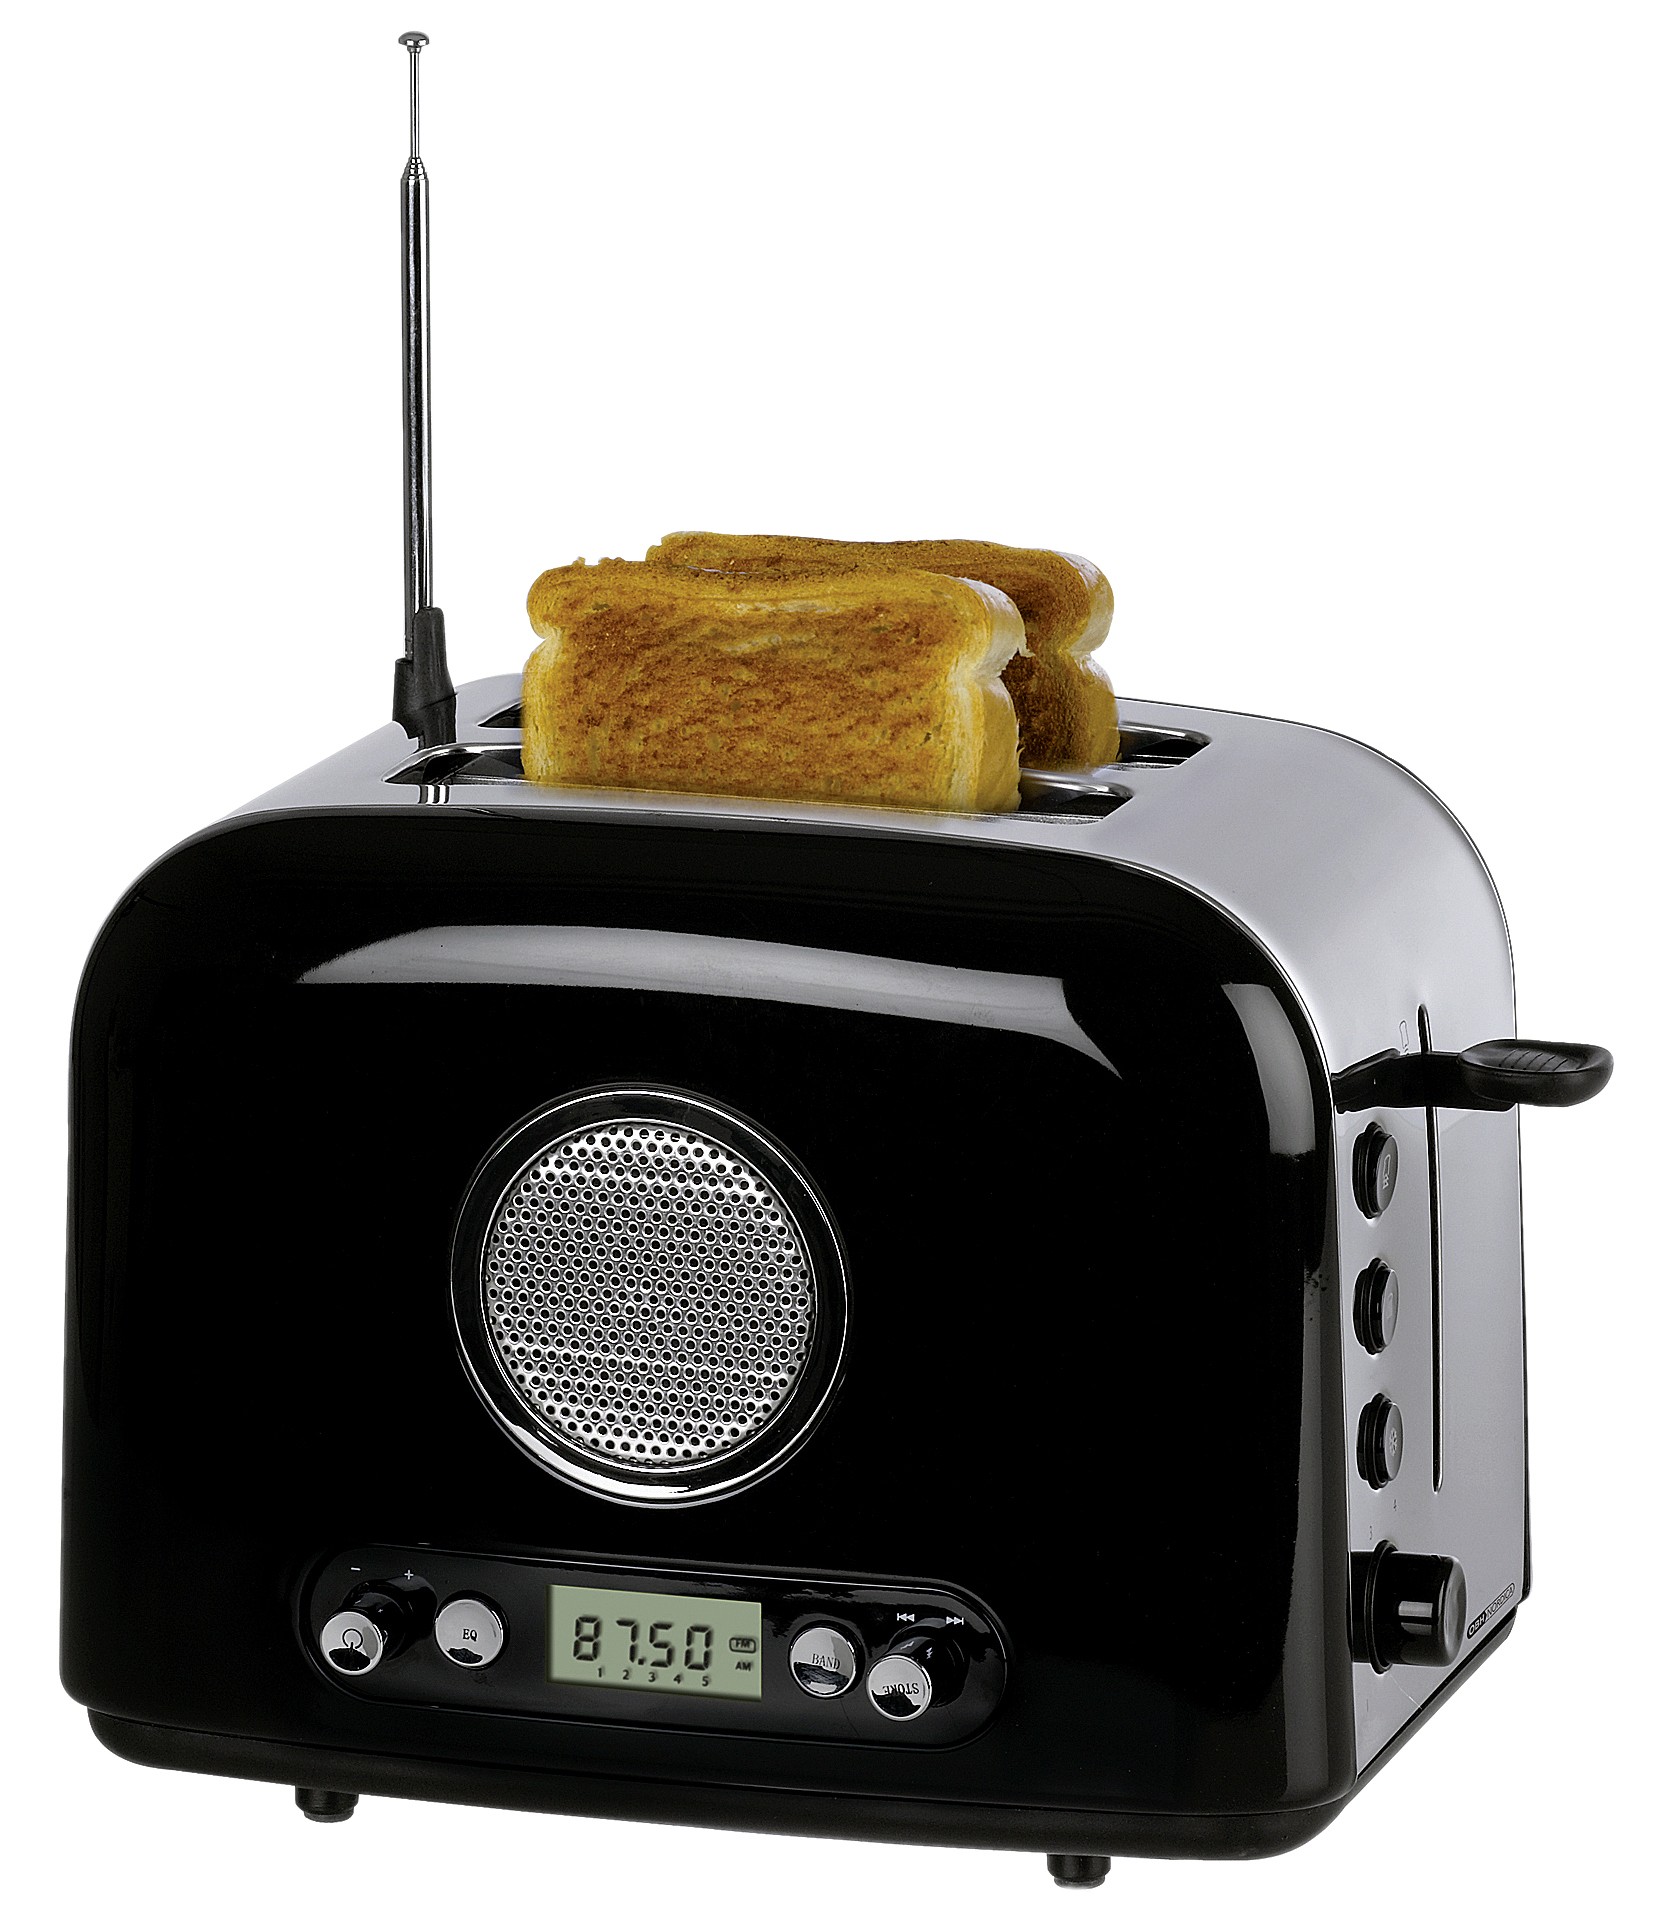 Obh nordica leivänpaahdin radiolla obh 2665